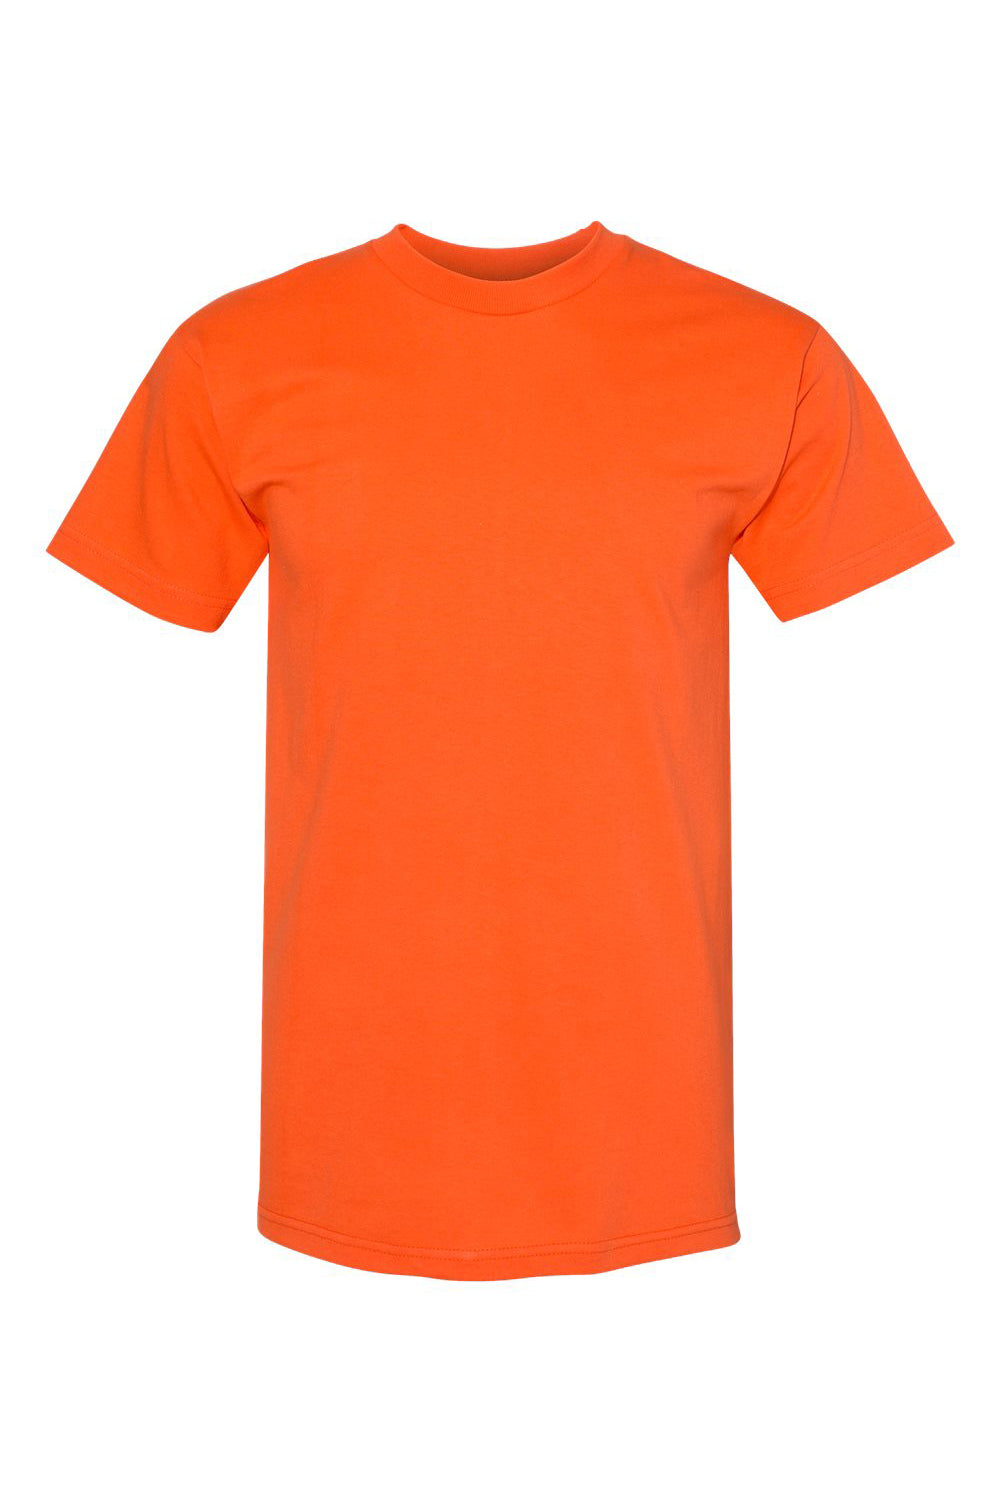 Bayside BA5100 Mens USA Made Short Sleeve Crewneck T-Shirt Bright Orange Flat Front